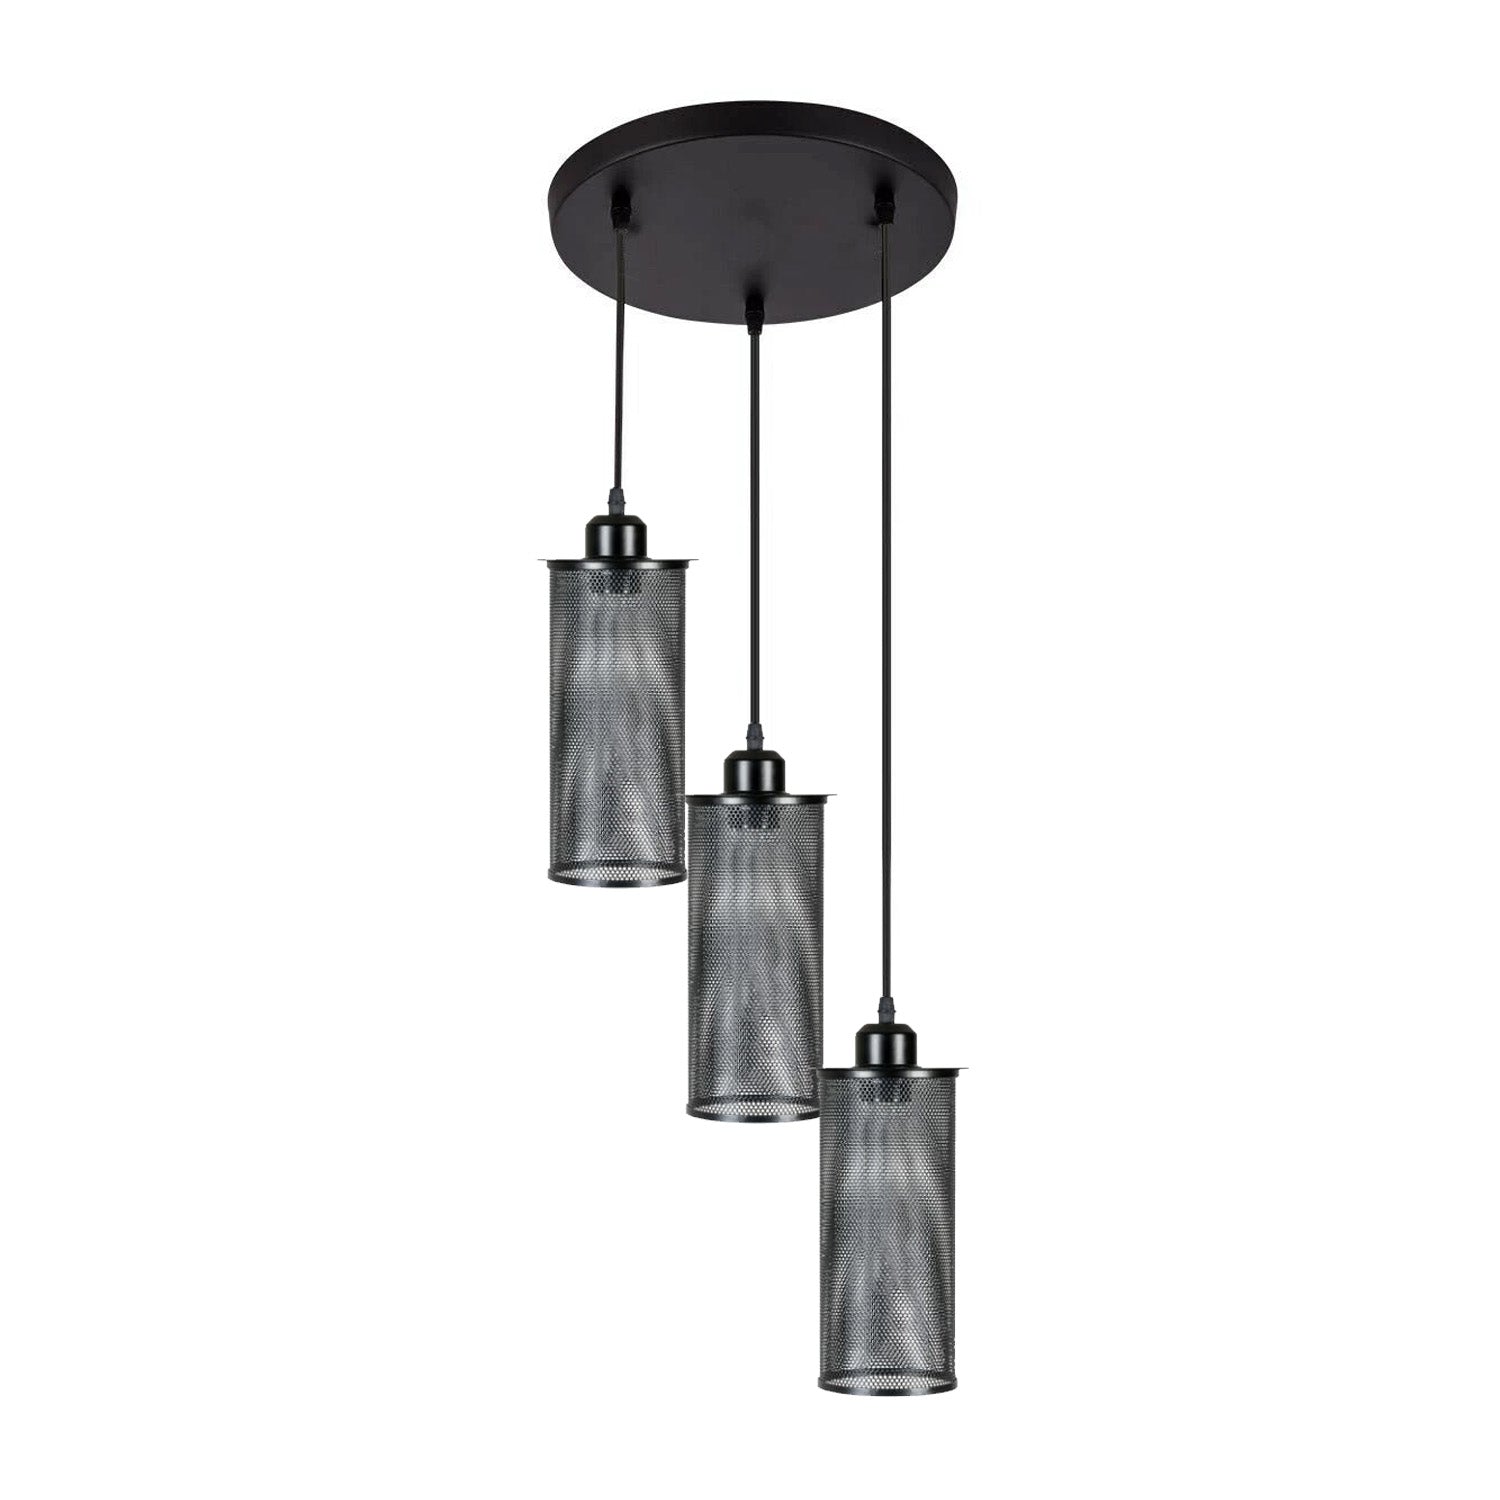 Modern Vintage Industrial Retro Loft Cluster Ceiling Lamp Shade Pendant Light UK~2148 - LEDSone UK Ltd